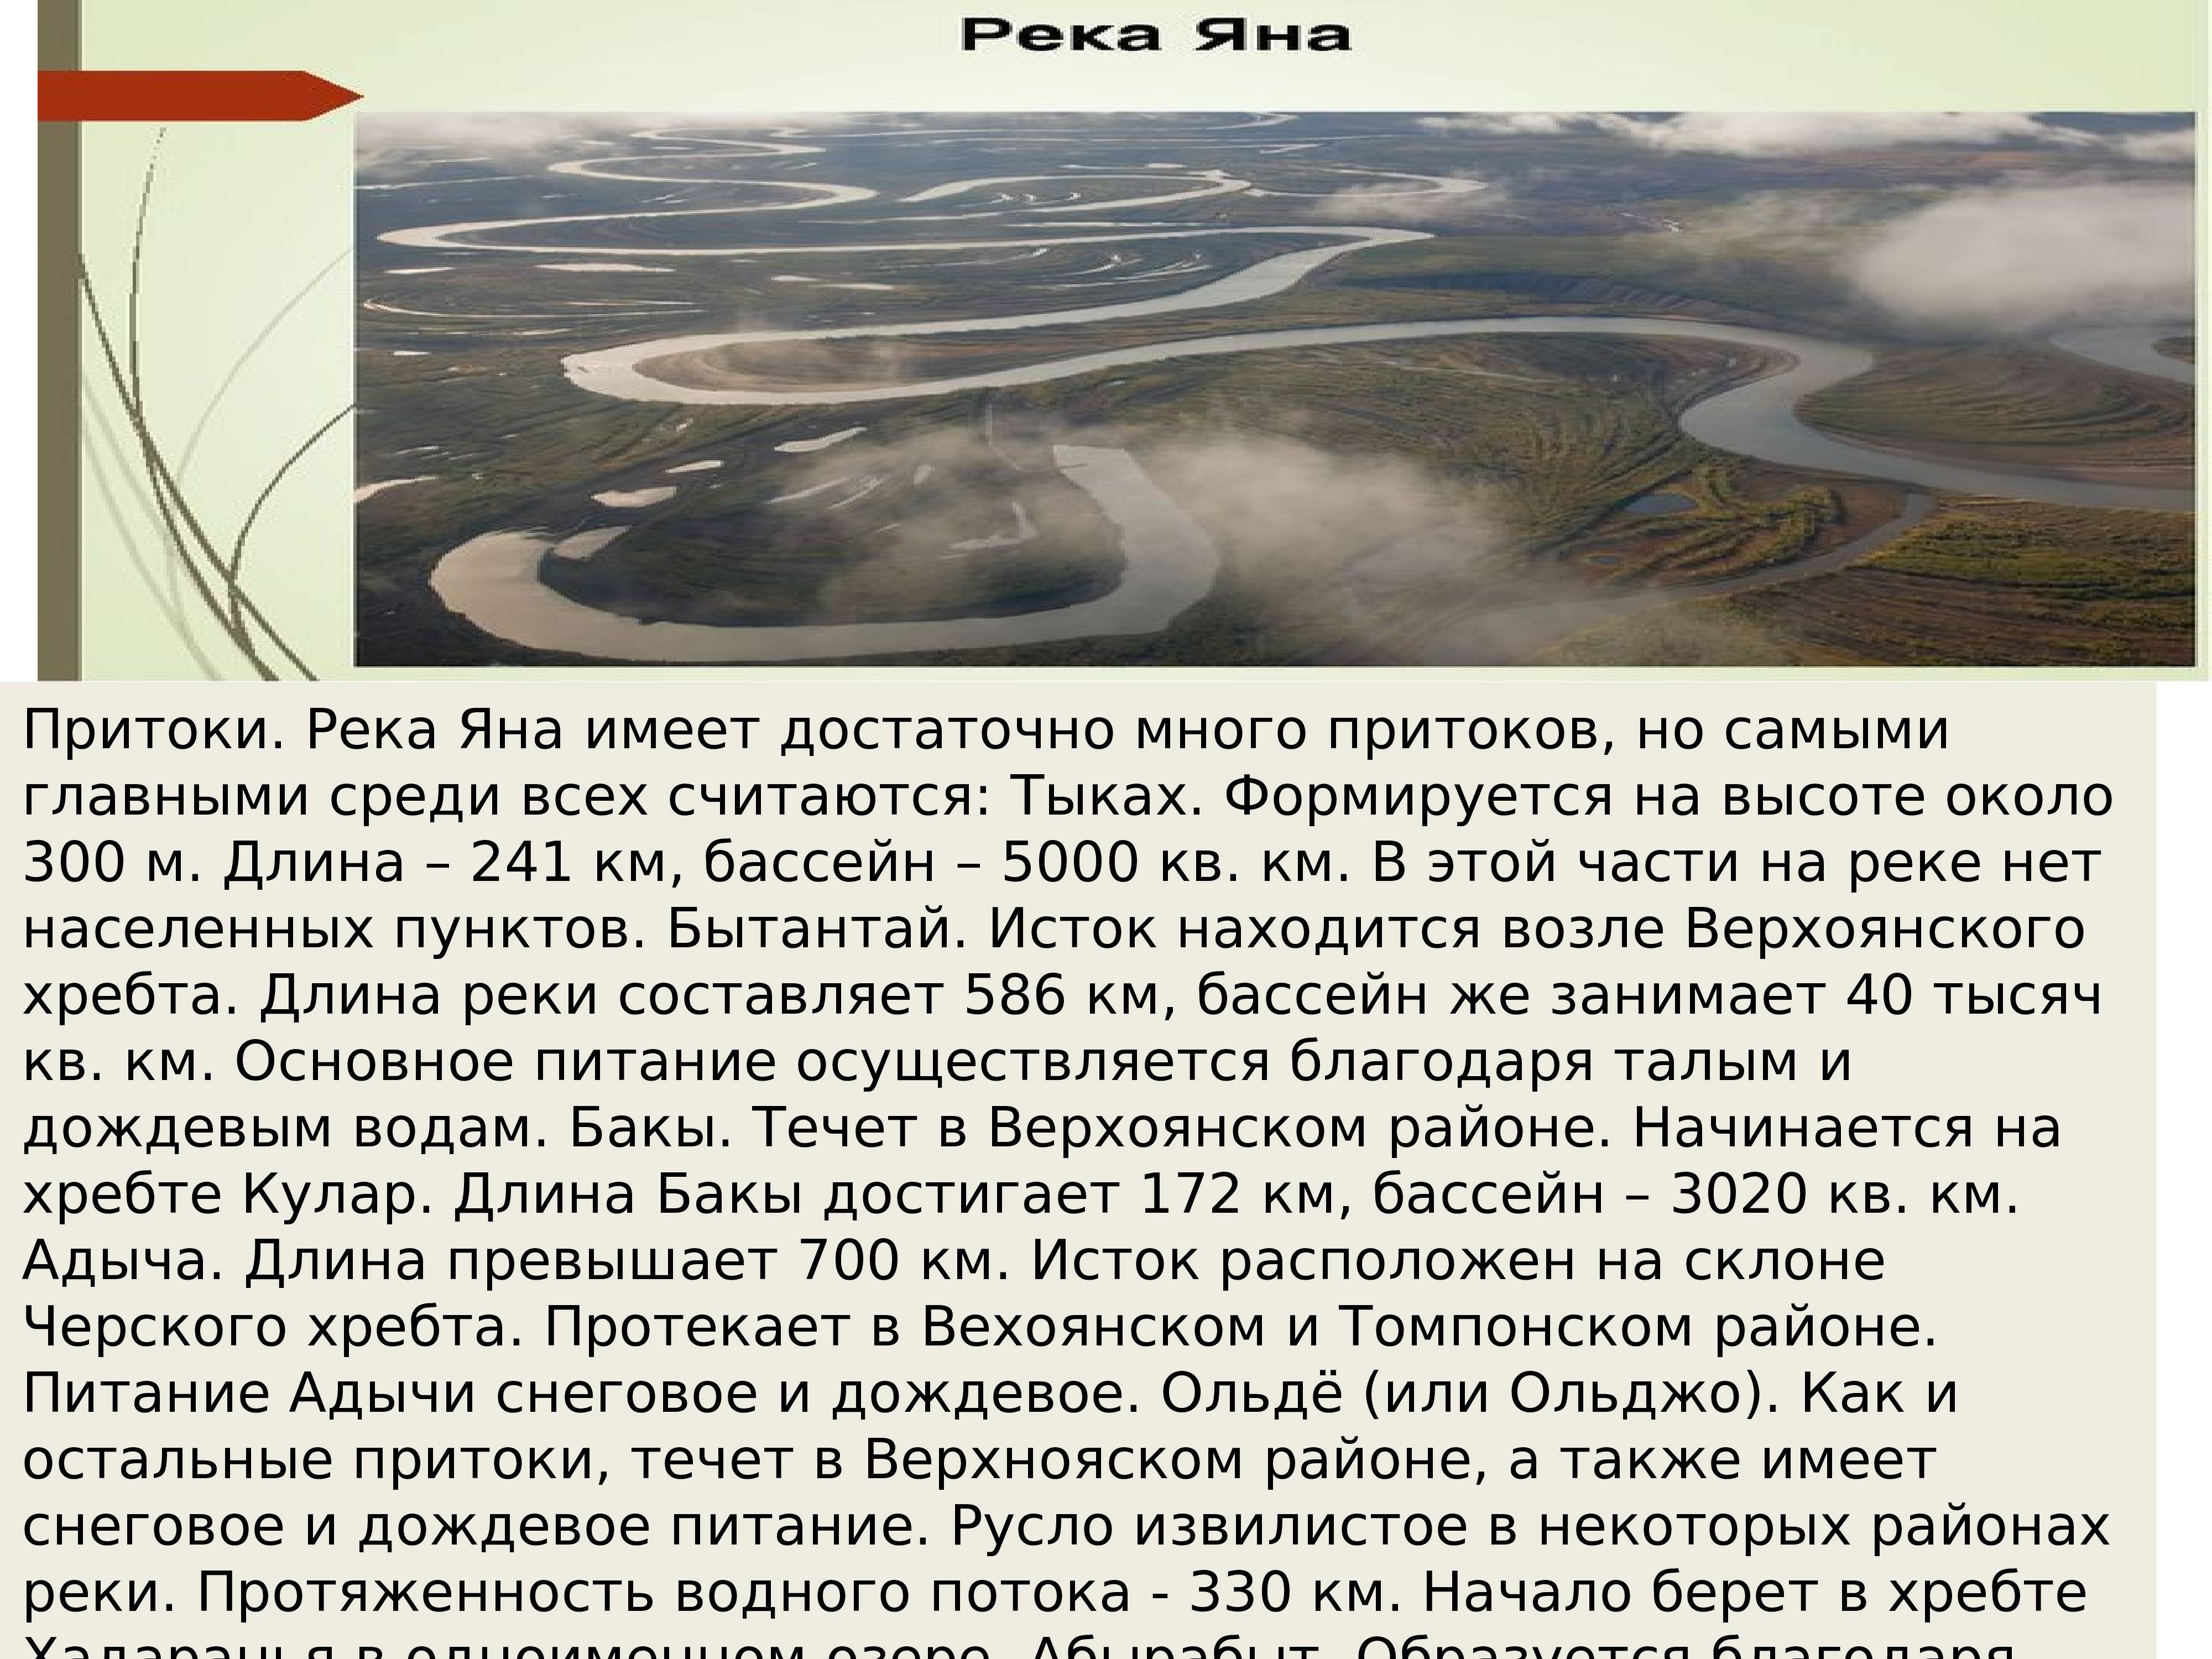 Река лена: исток, бассейн и устье реки, обзор рыбалки и туризма